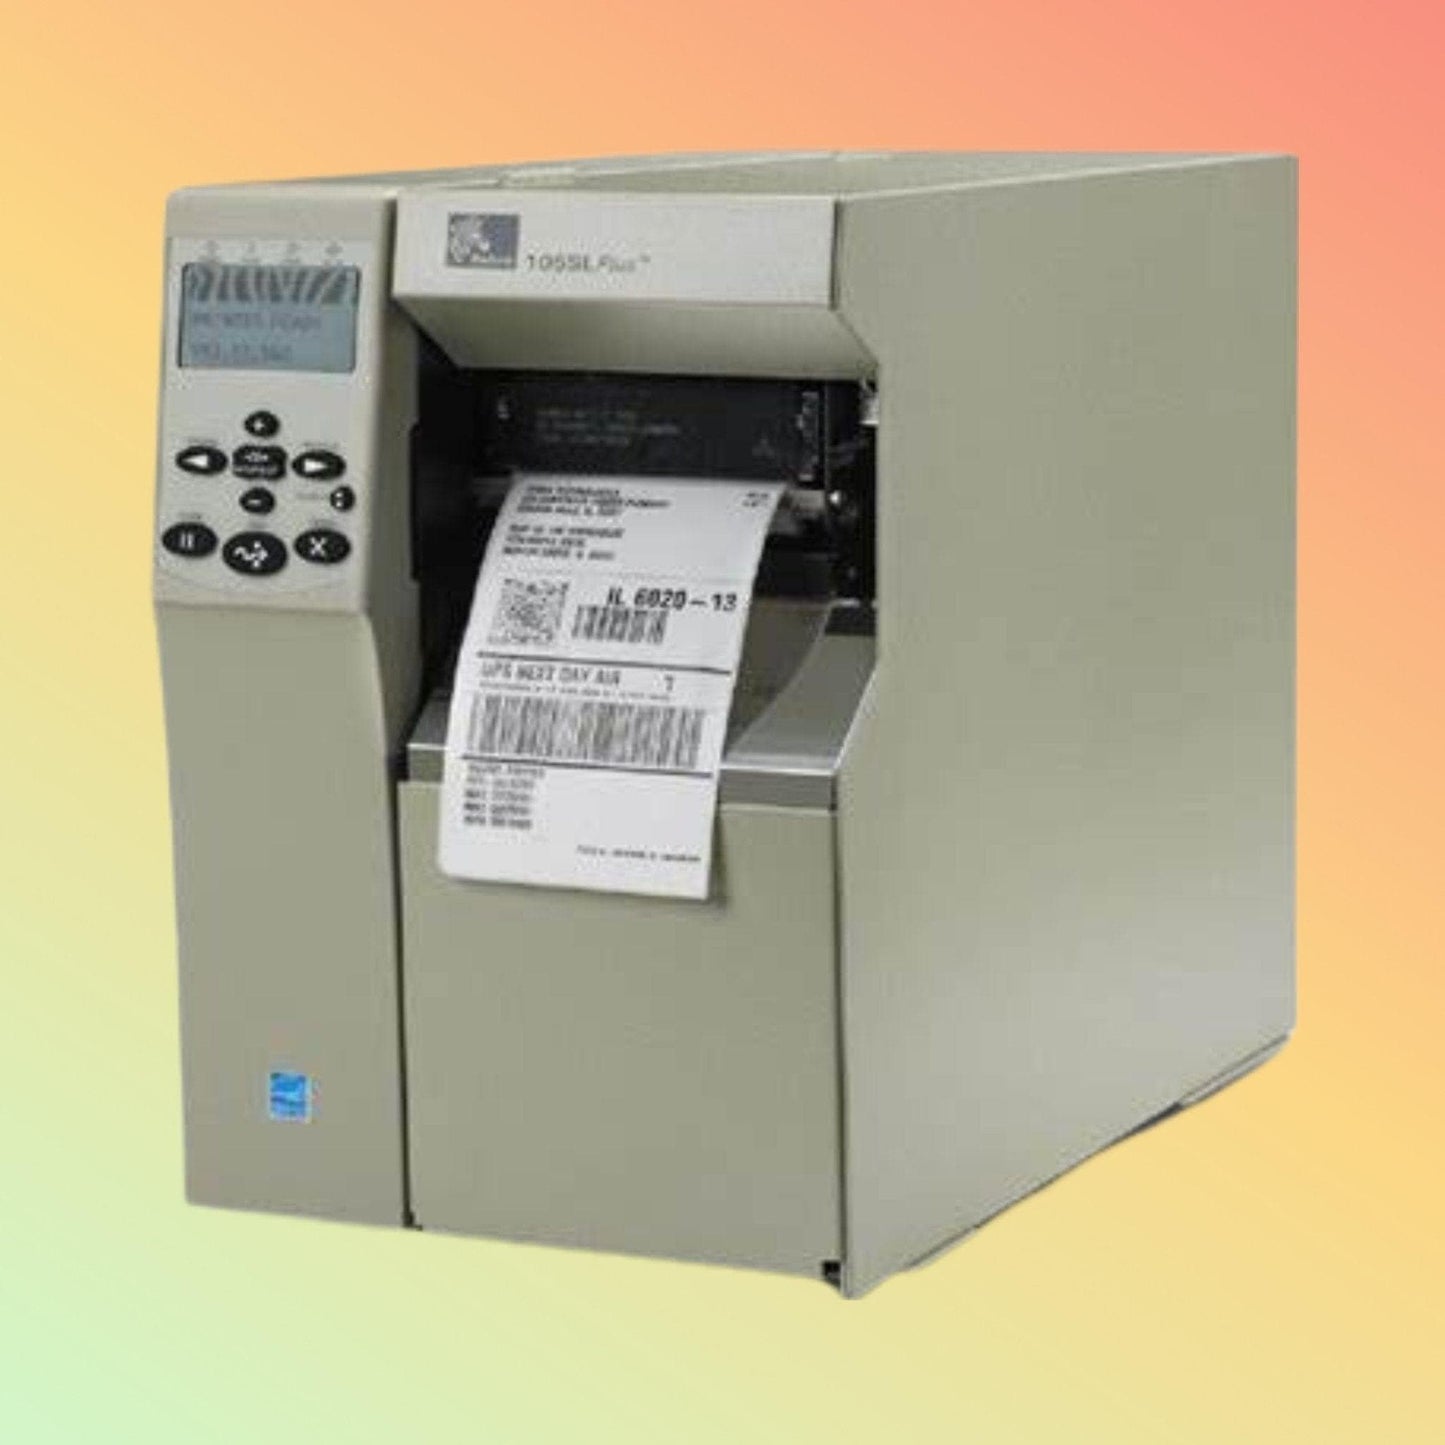 Barcode Printer - Zebra 105SL - Neotech